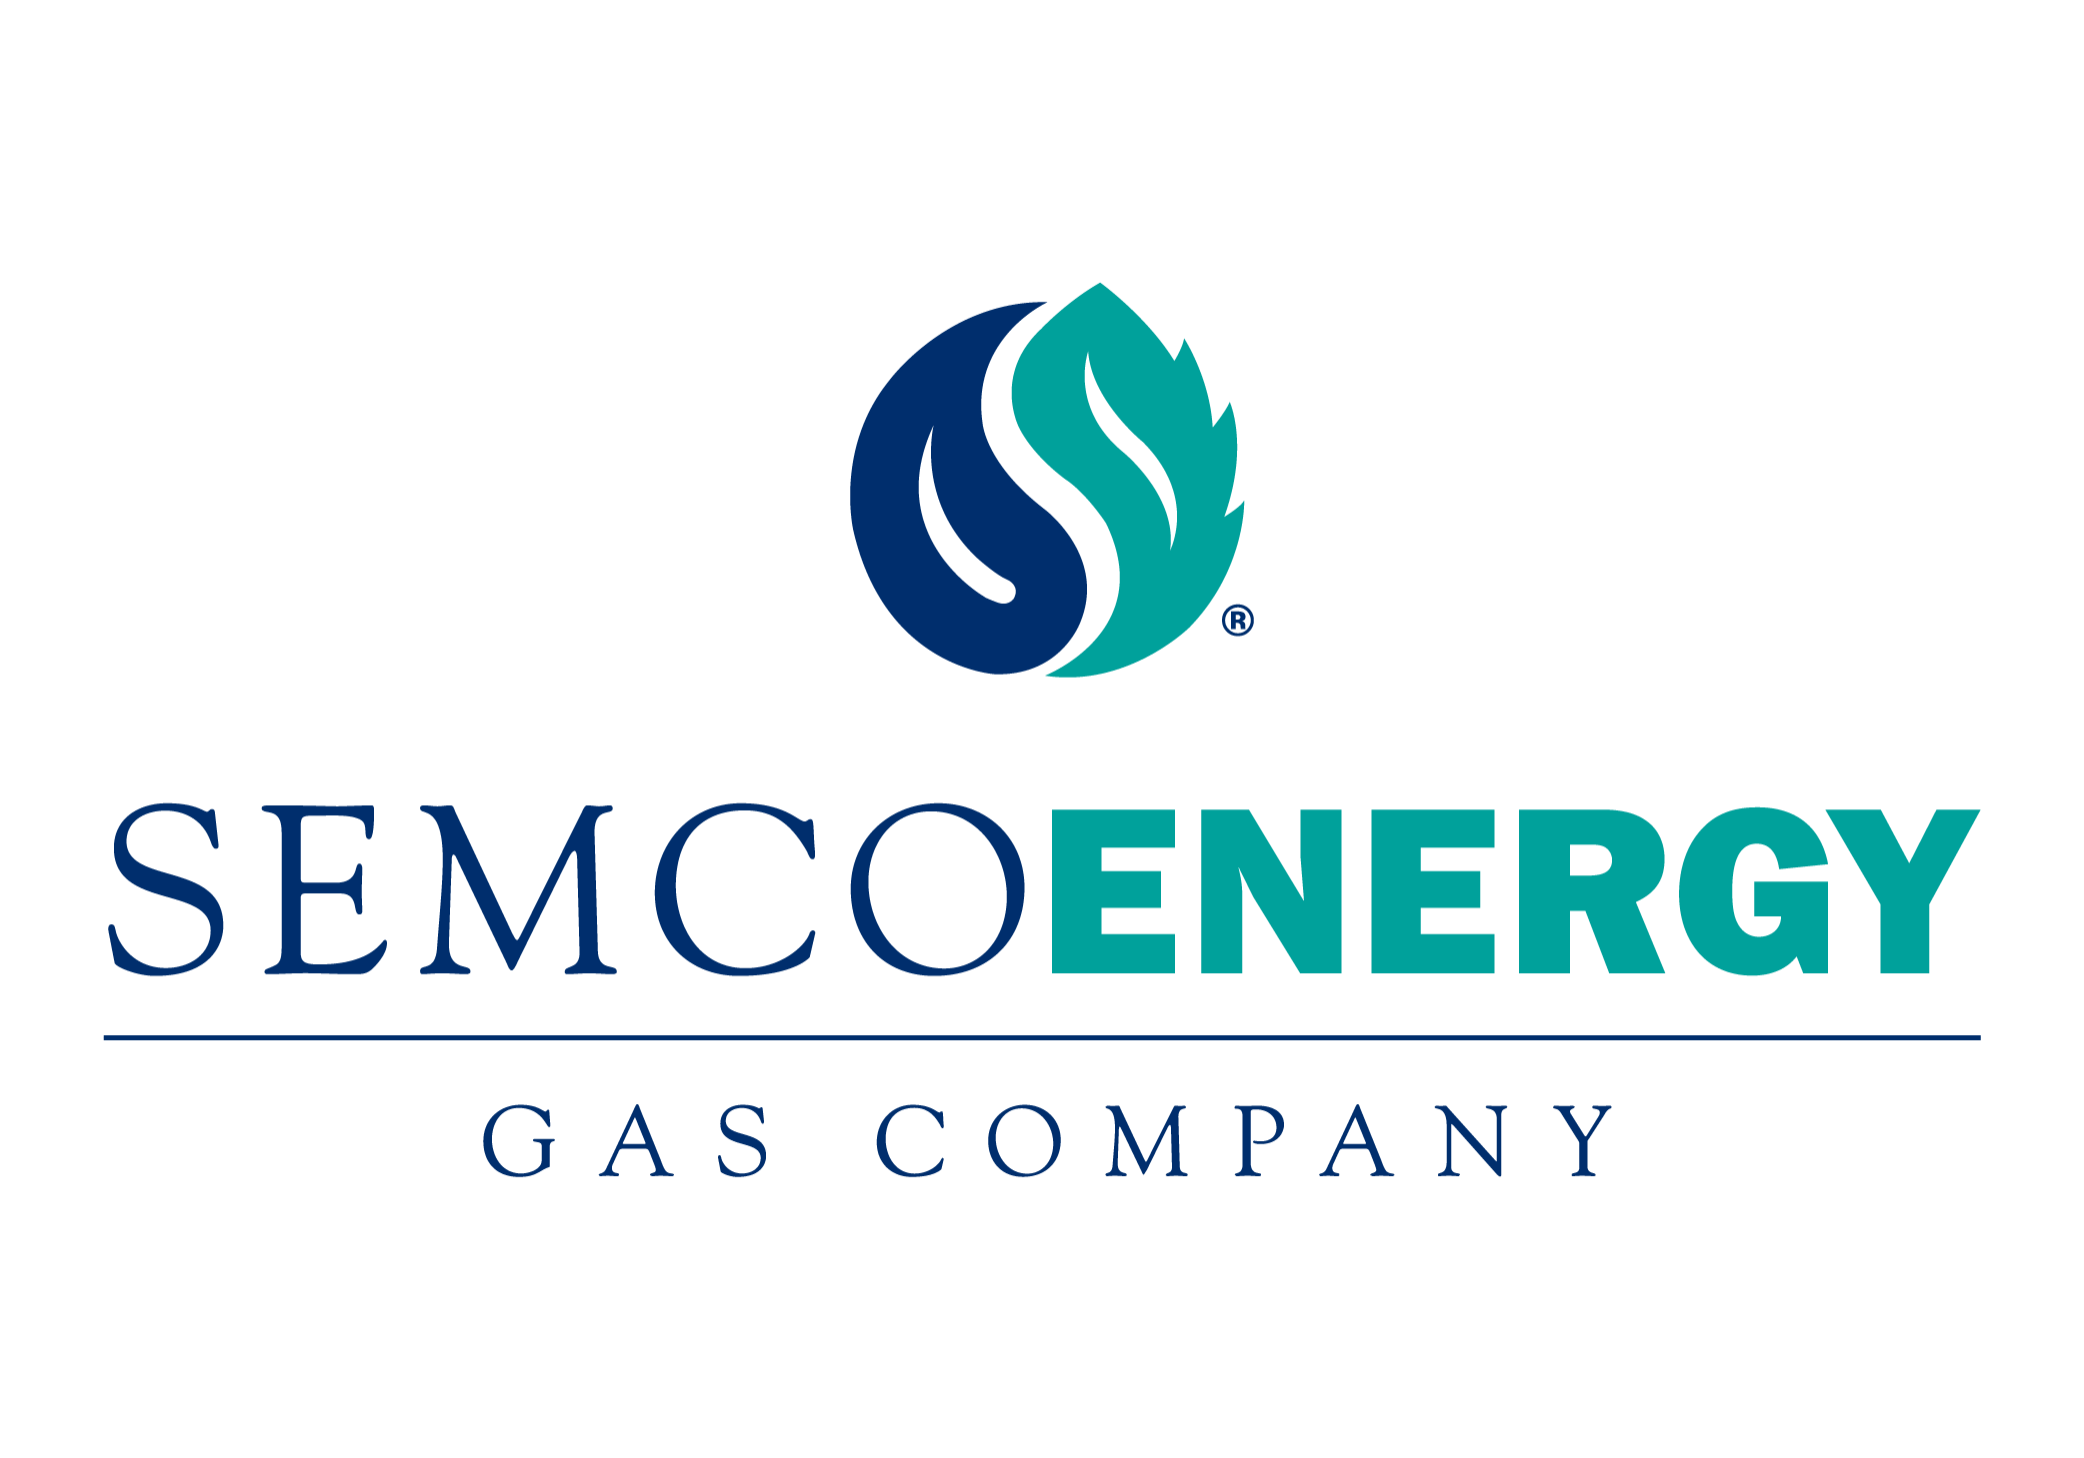 Semco Energy gas company logo